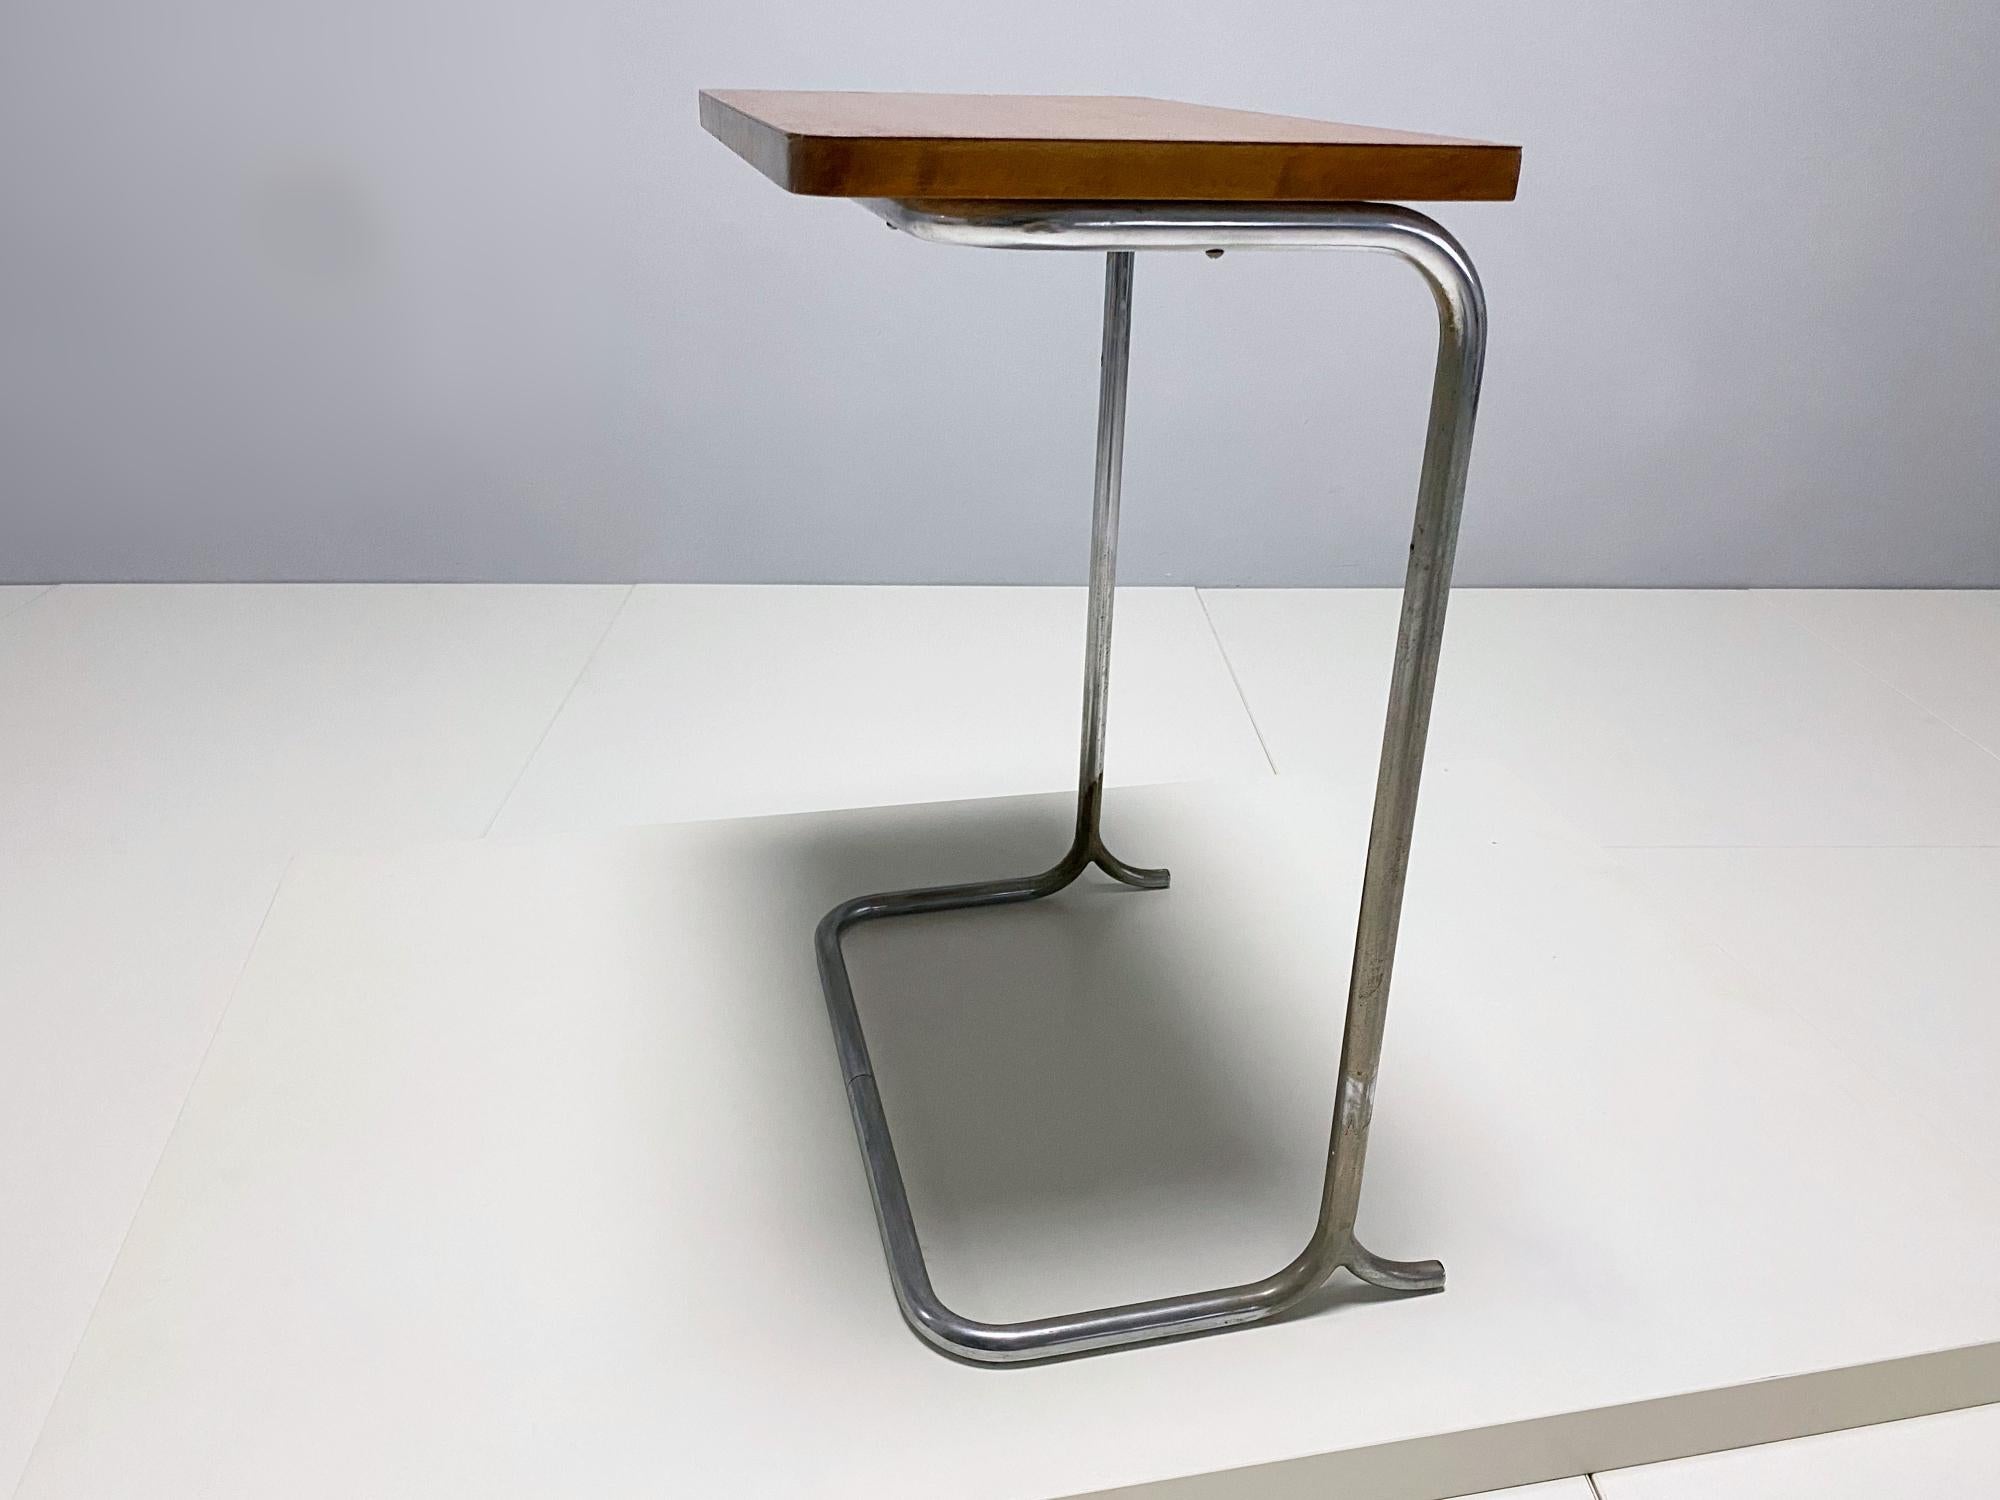 German Marcel Breuer Attributed Bauhaus Nickel-Plated Steel & Walnut Side Table, 1920s For Sale